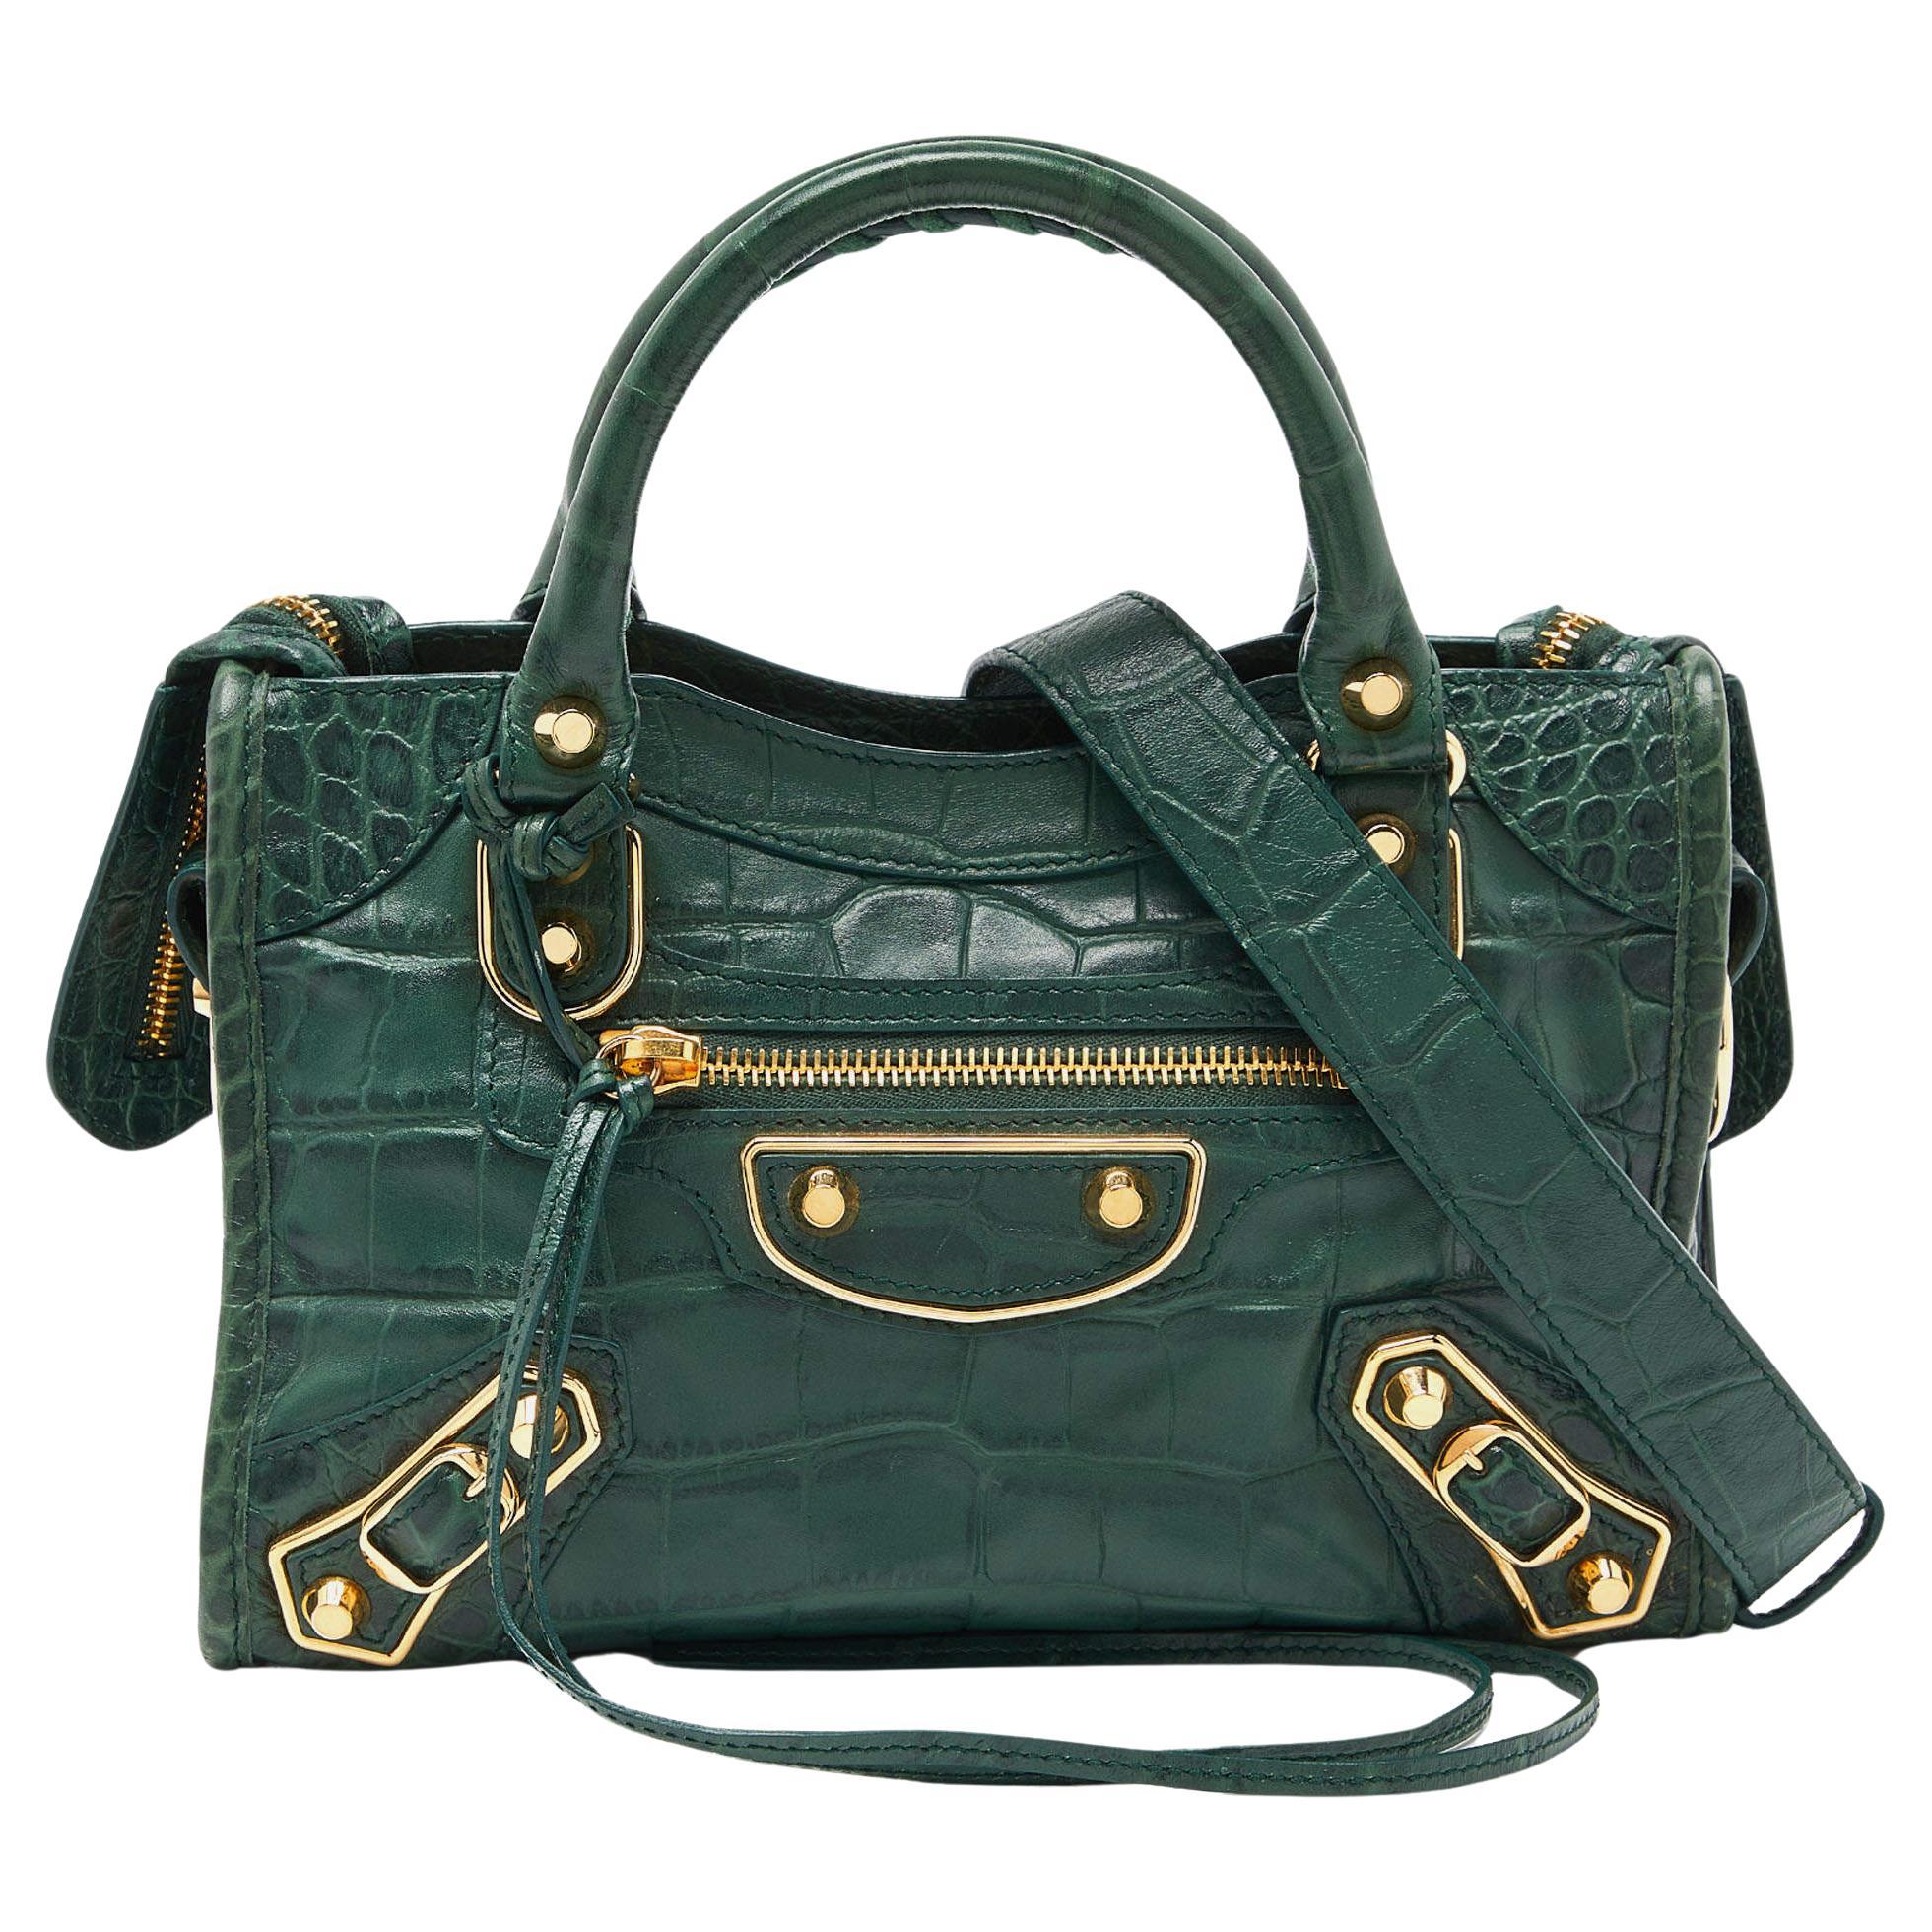 Balenciaga Green Croc Embossed Leather Mini Classic Metallic Edge City Bag